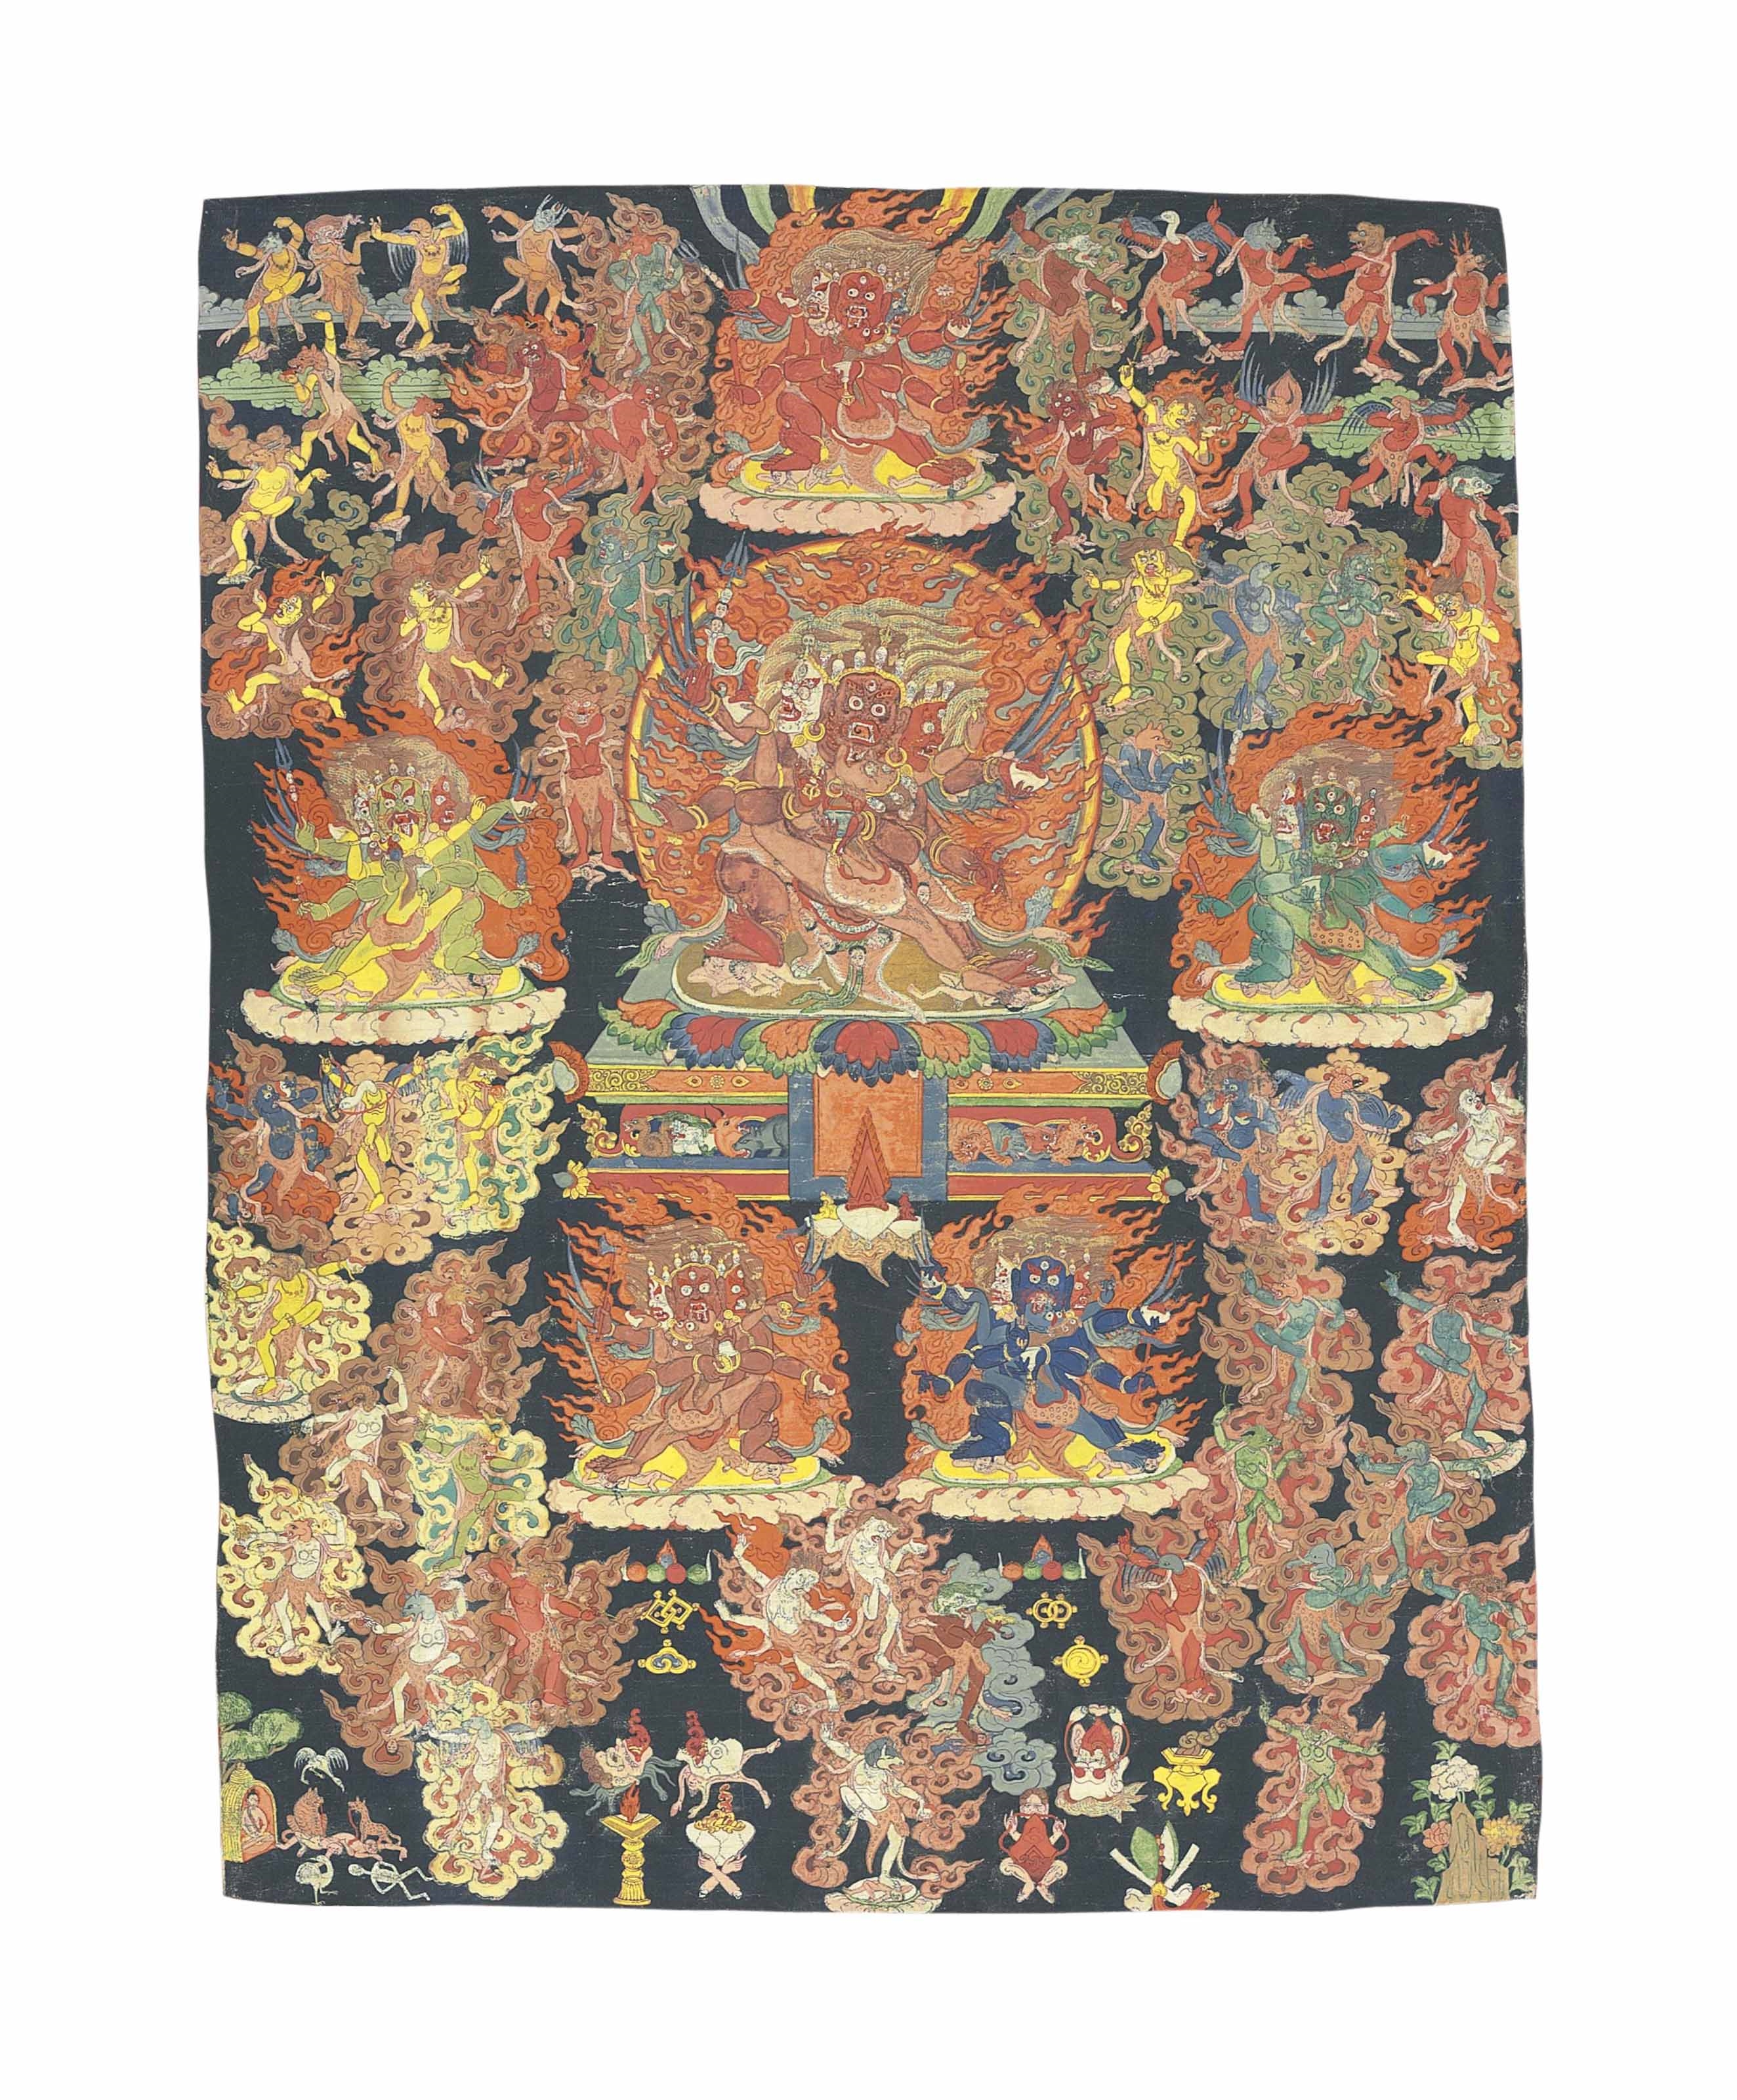 A painting of the 58 Wrathful Deities of the Guhyagarbha Tantra by Tibetan School, 18th Century